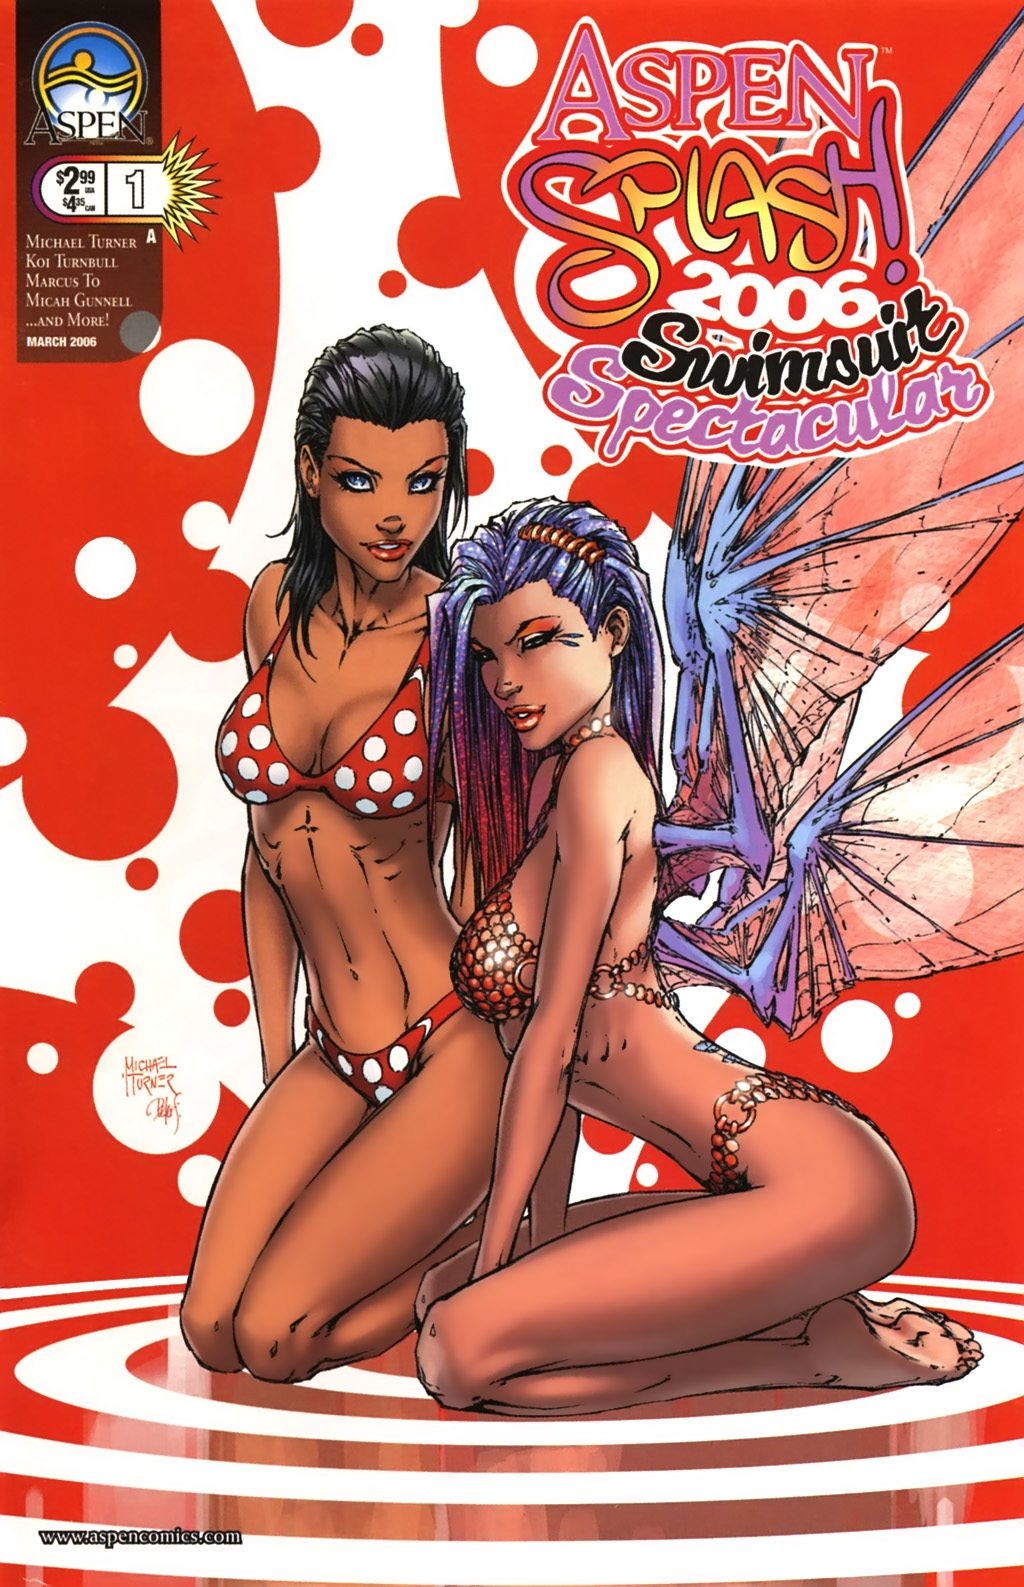 Read online Aspen Splash: Swimsuit Spectacular comic -  Issue # Issue 2006 - 1